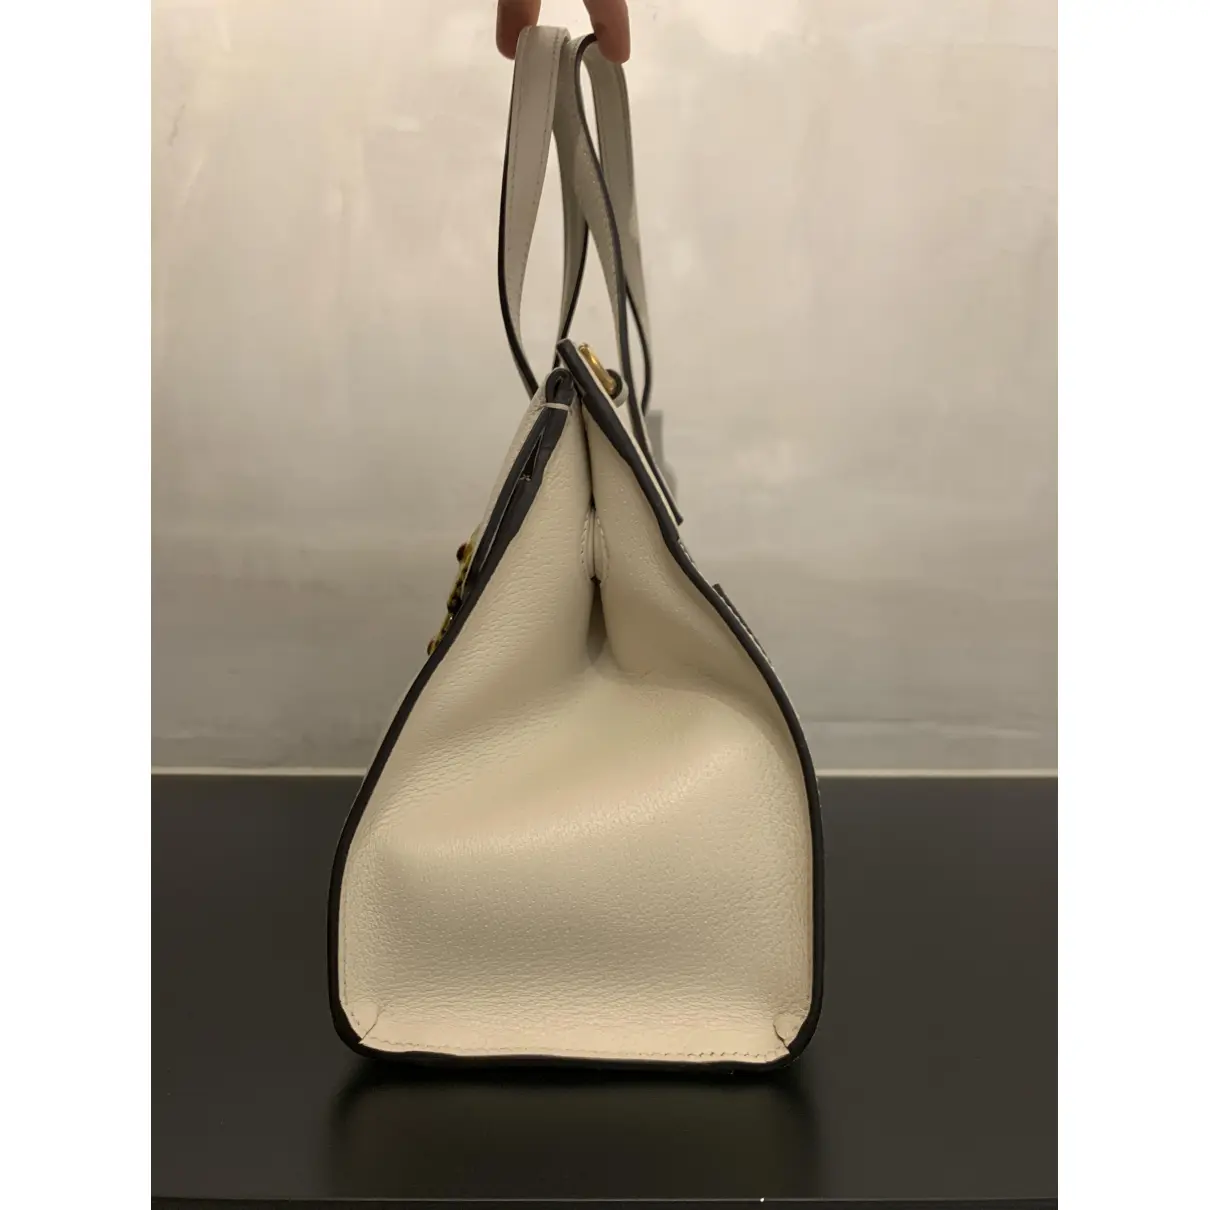 Buy Gucci GucciTotem leather handbag online